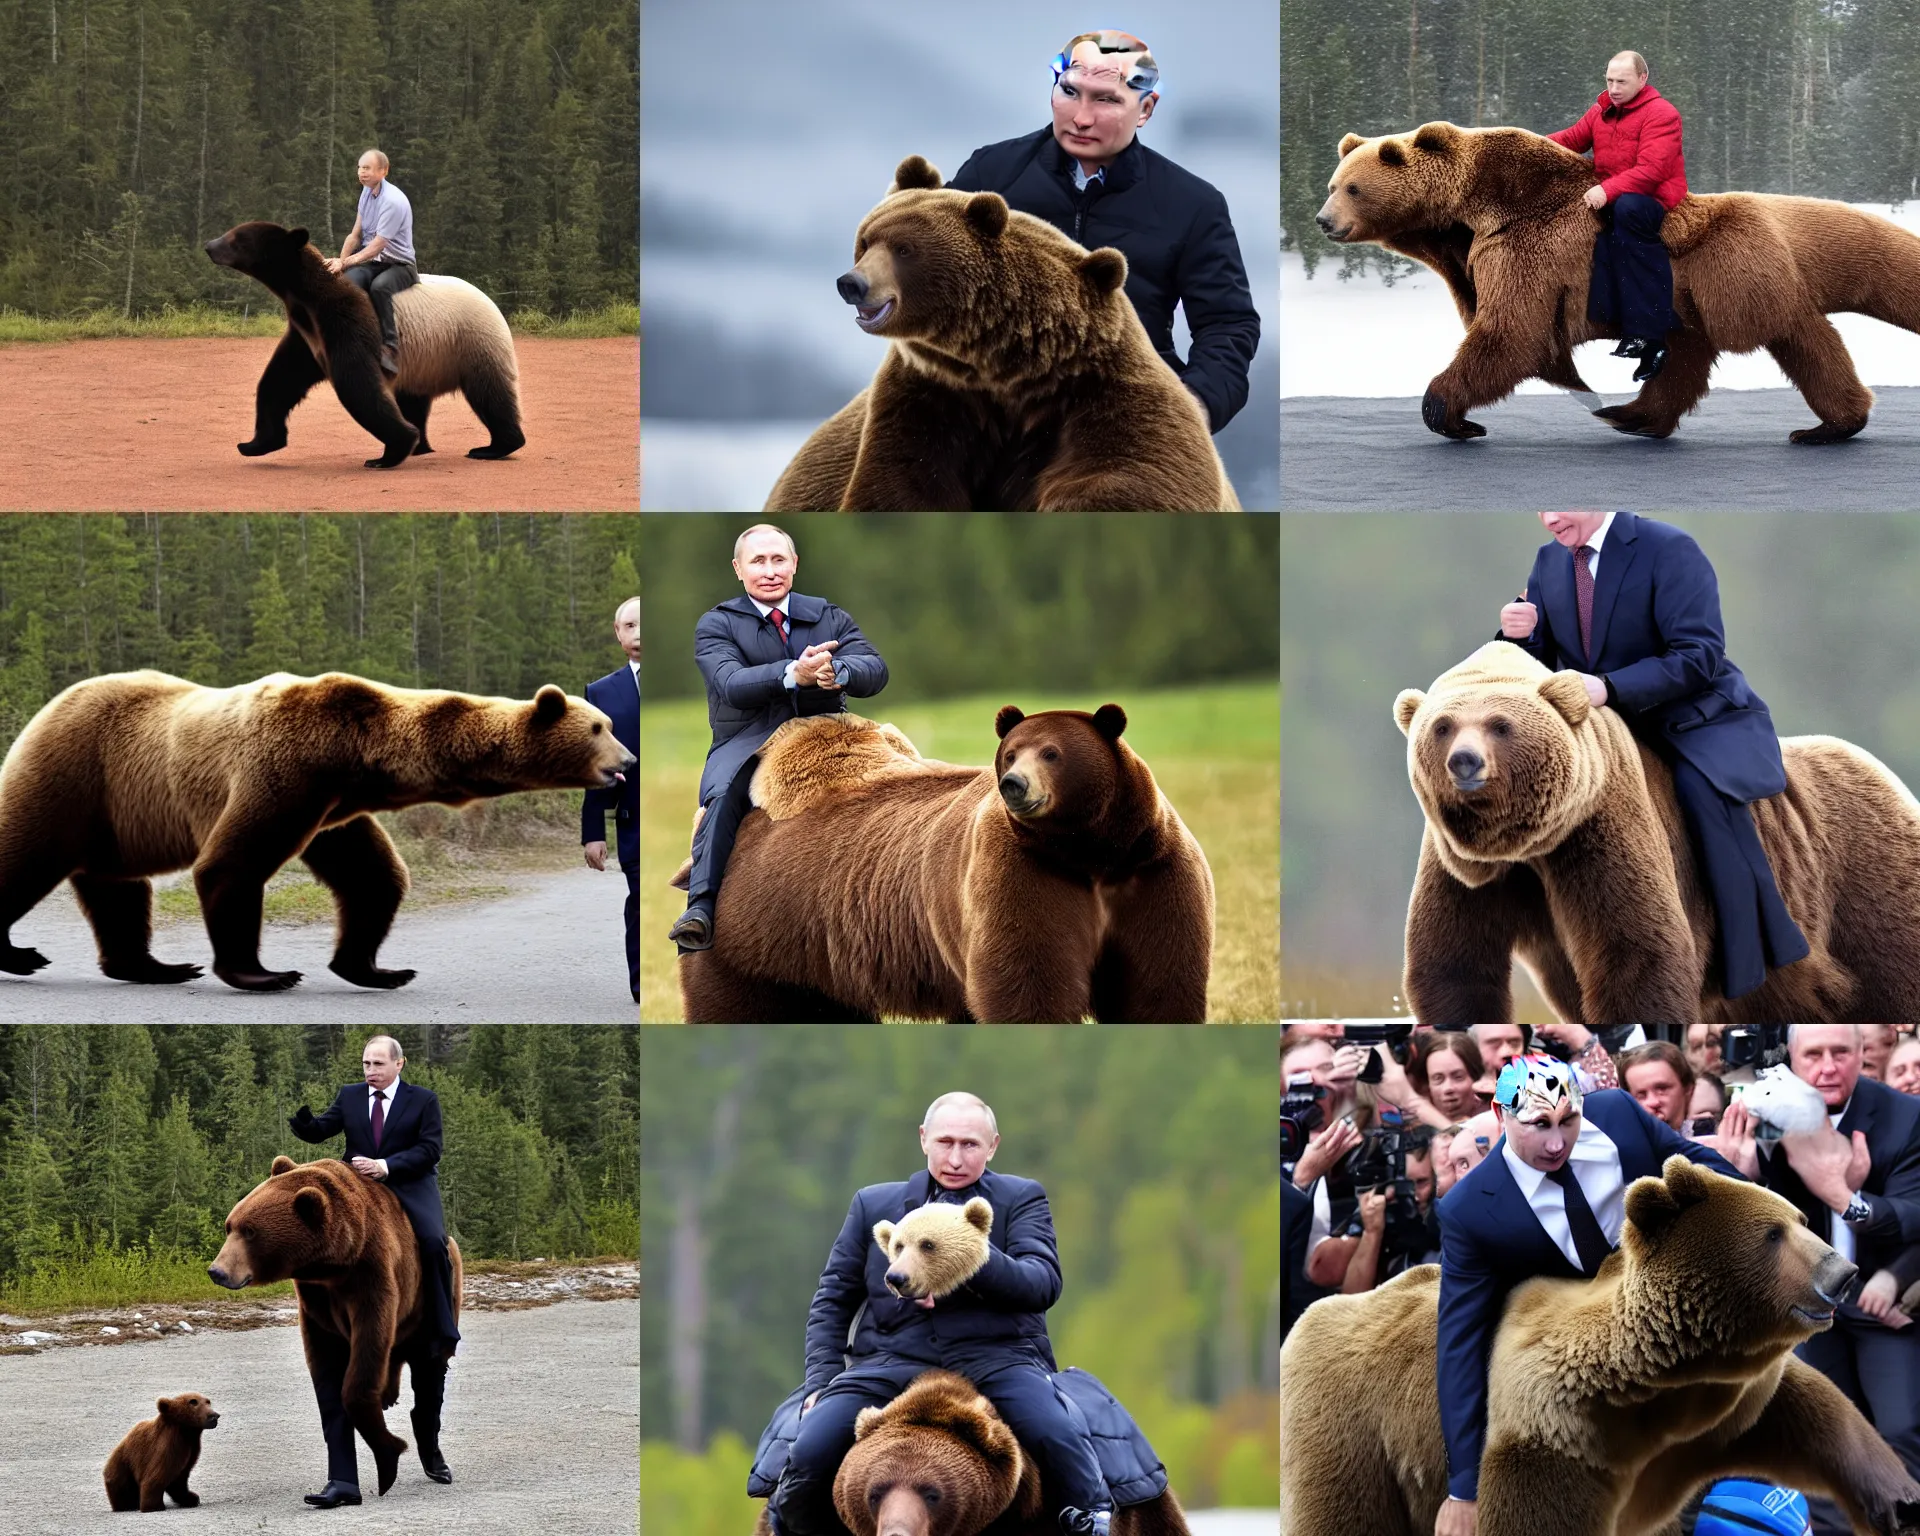 Prompt: vladimir putin rides a bear, 8 k